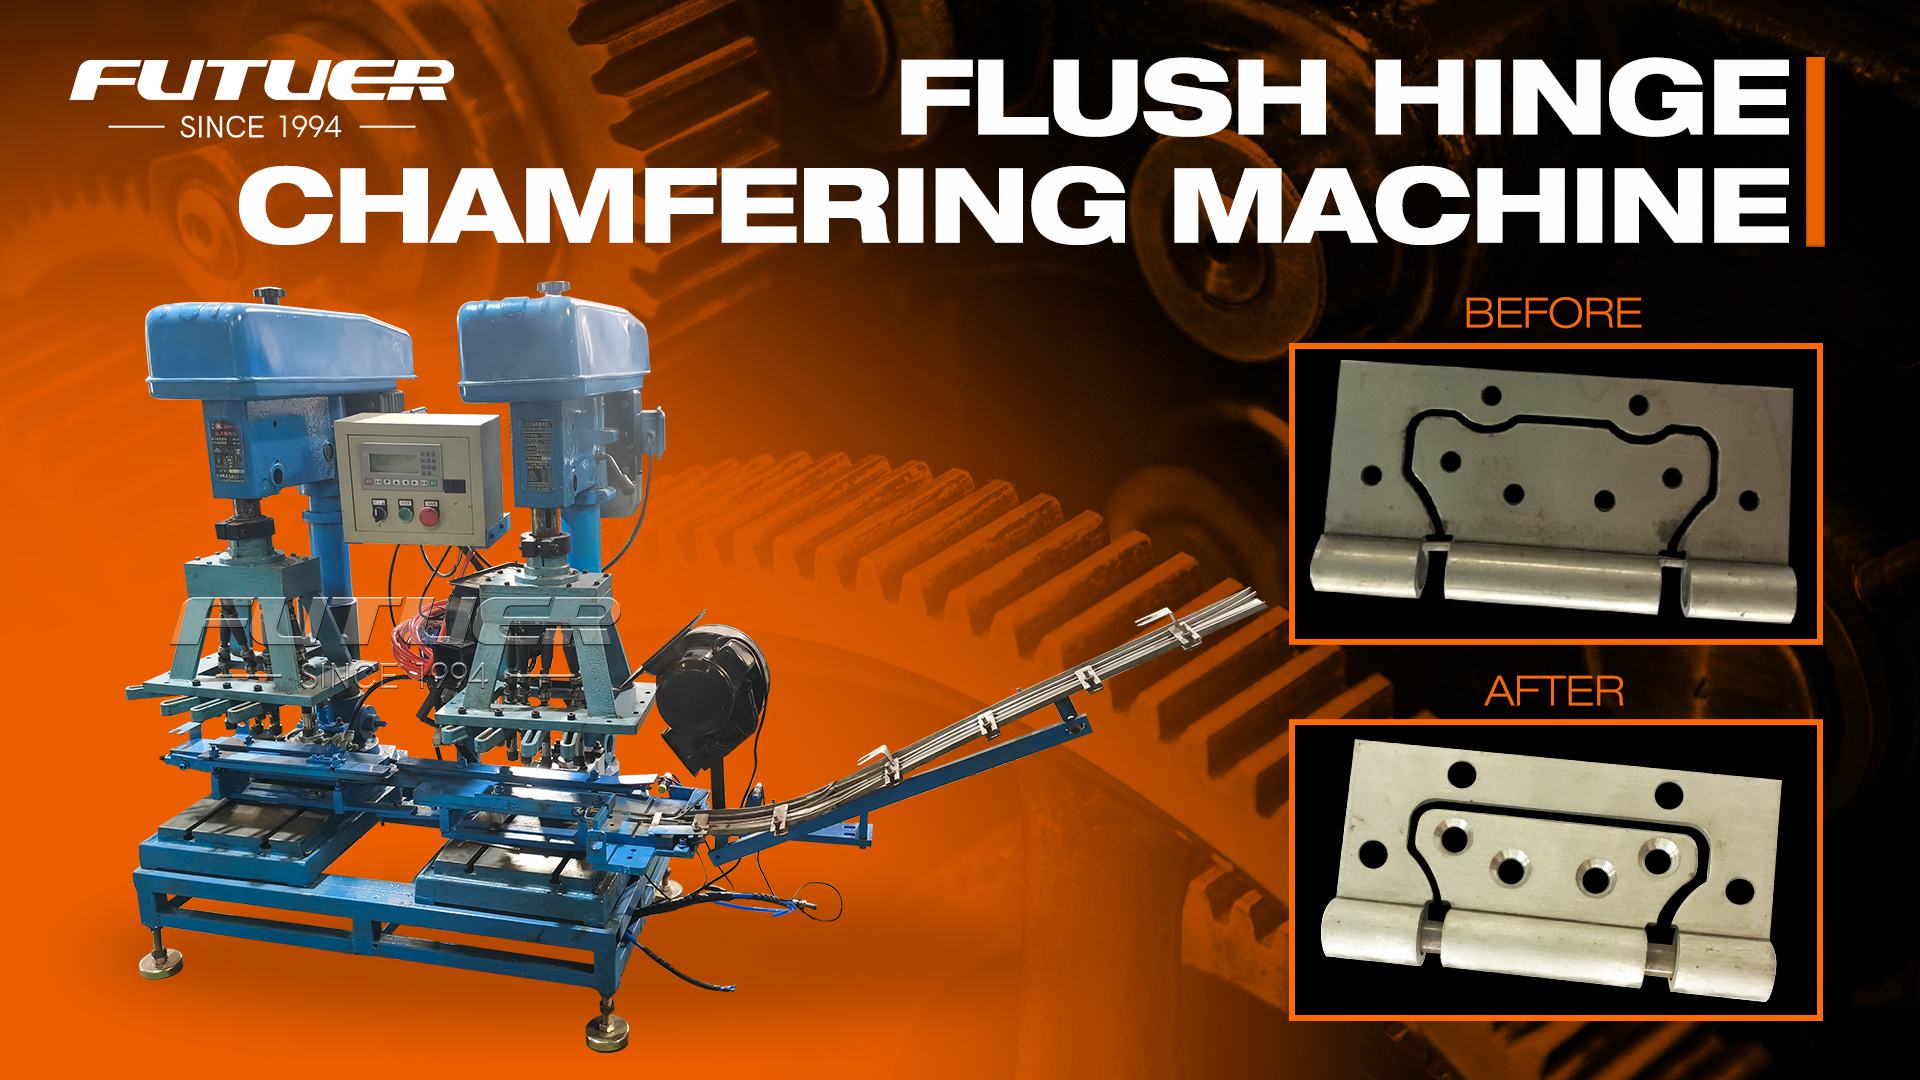 Flush hinge chamfering machine